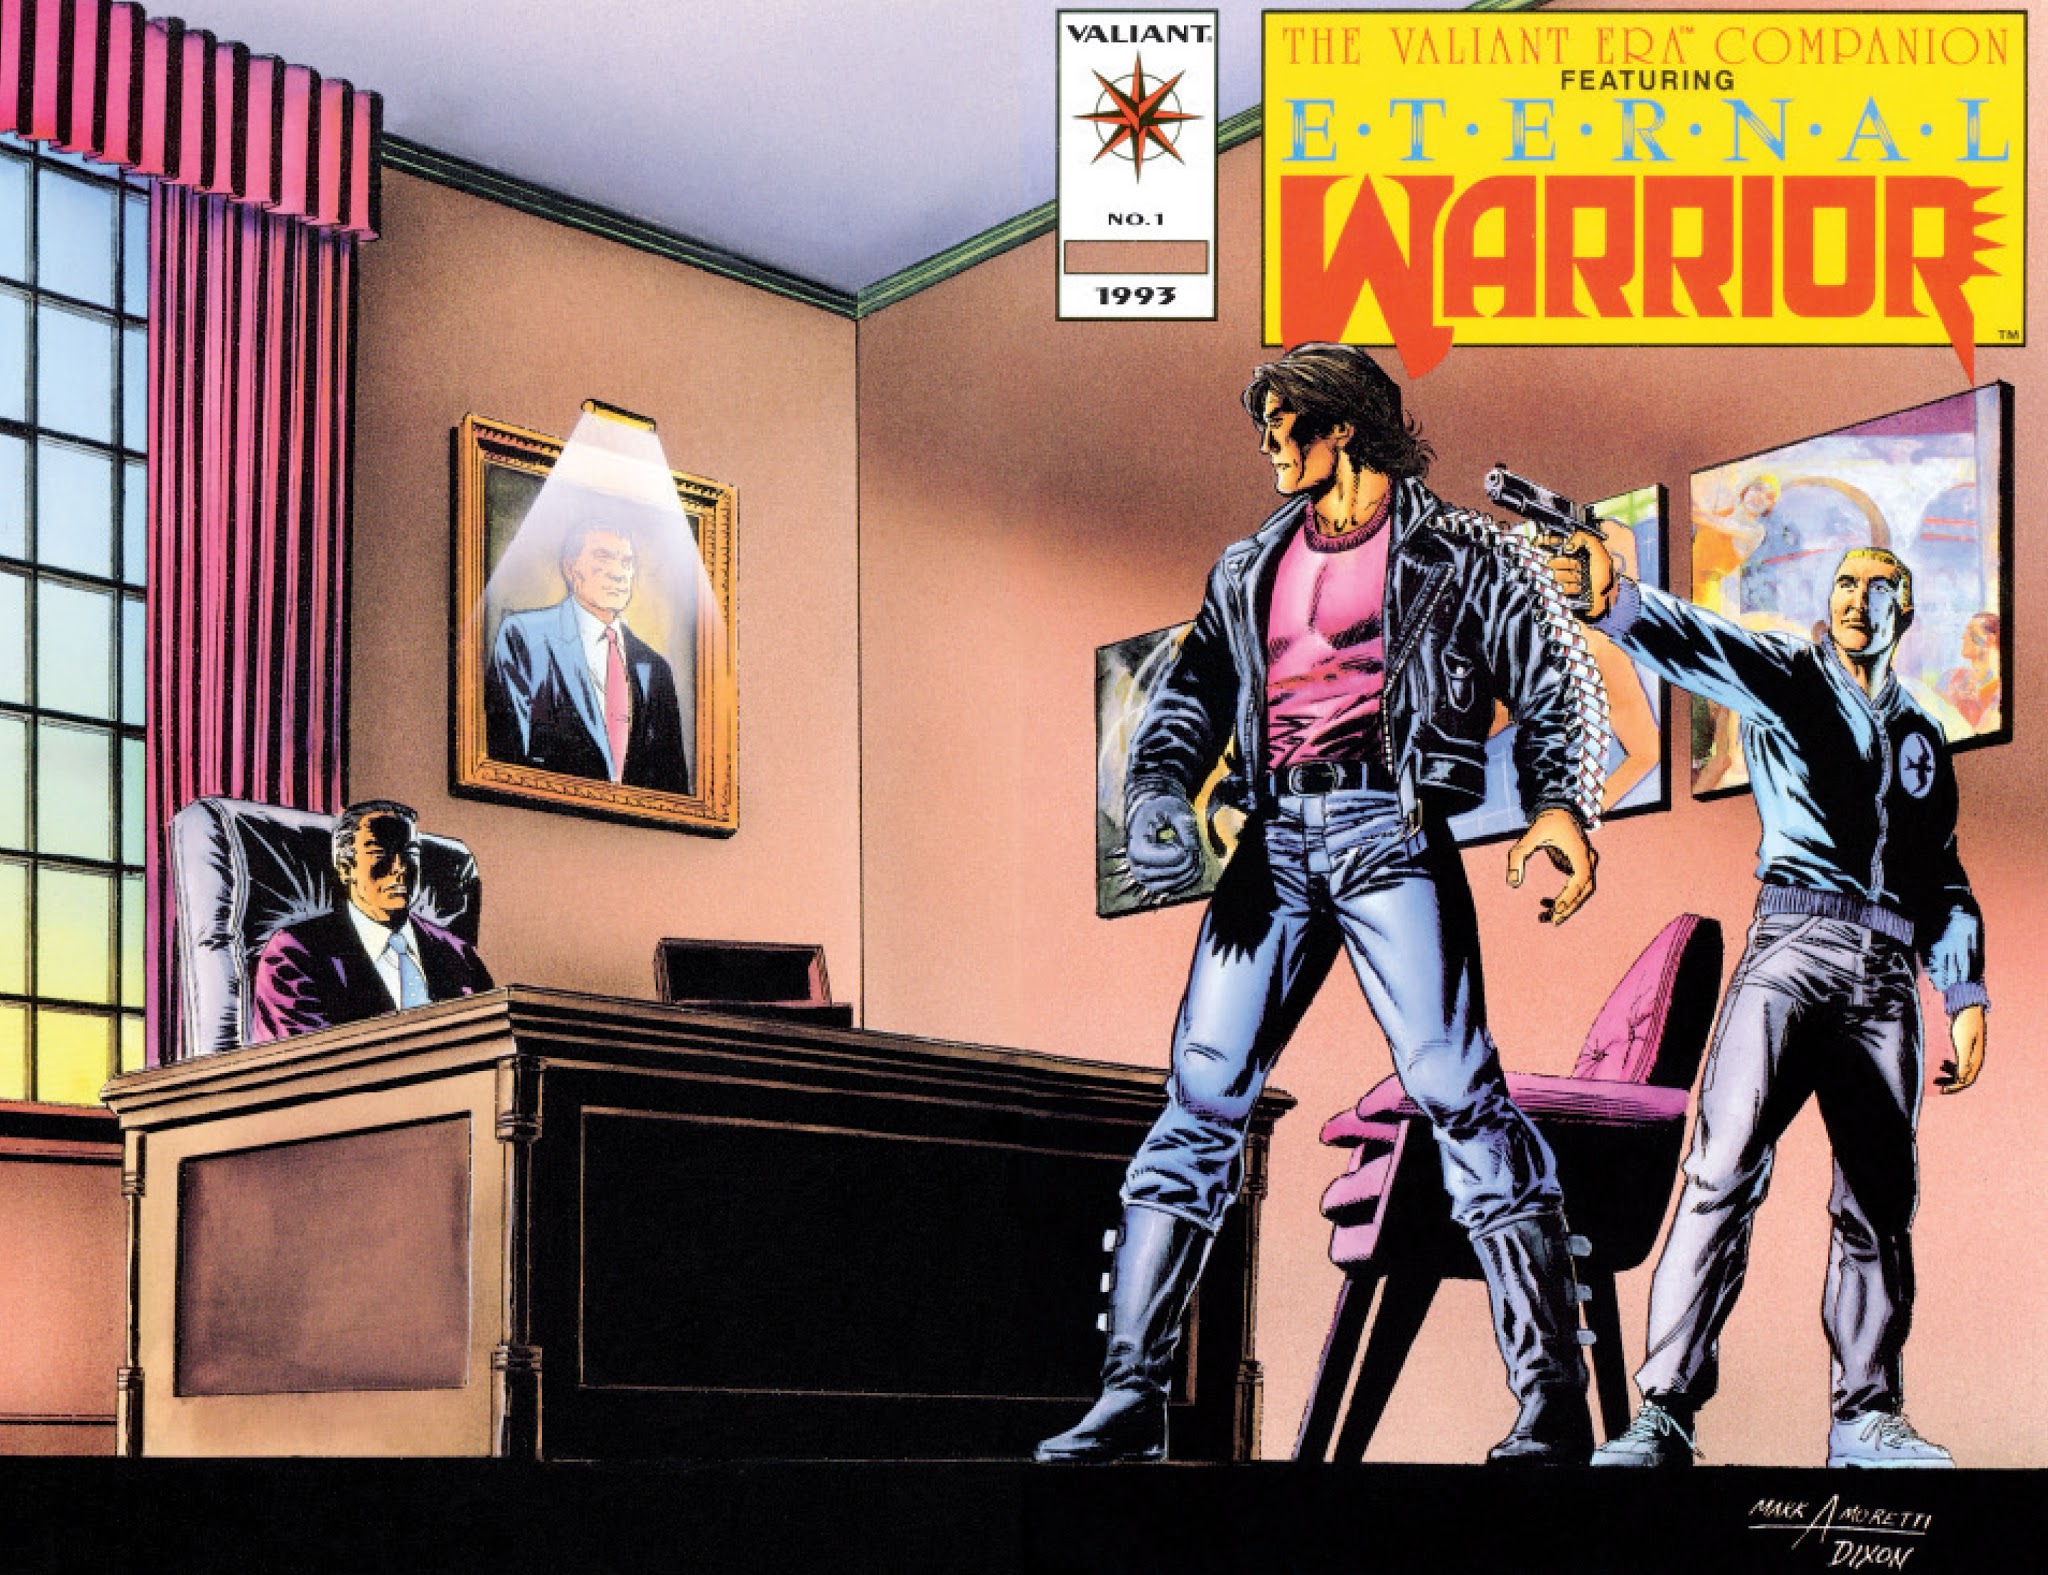 Read online The Valiant Era comic -  Issue # Full - 2